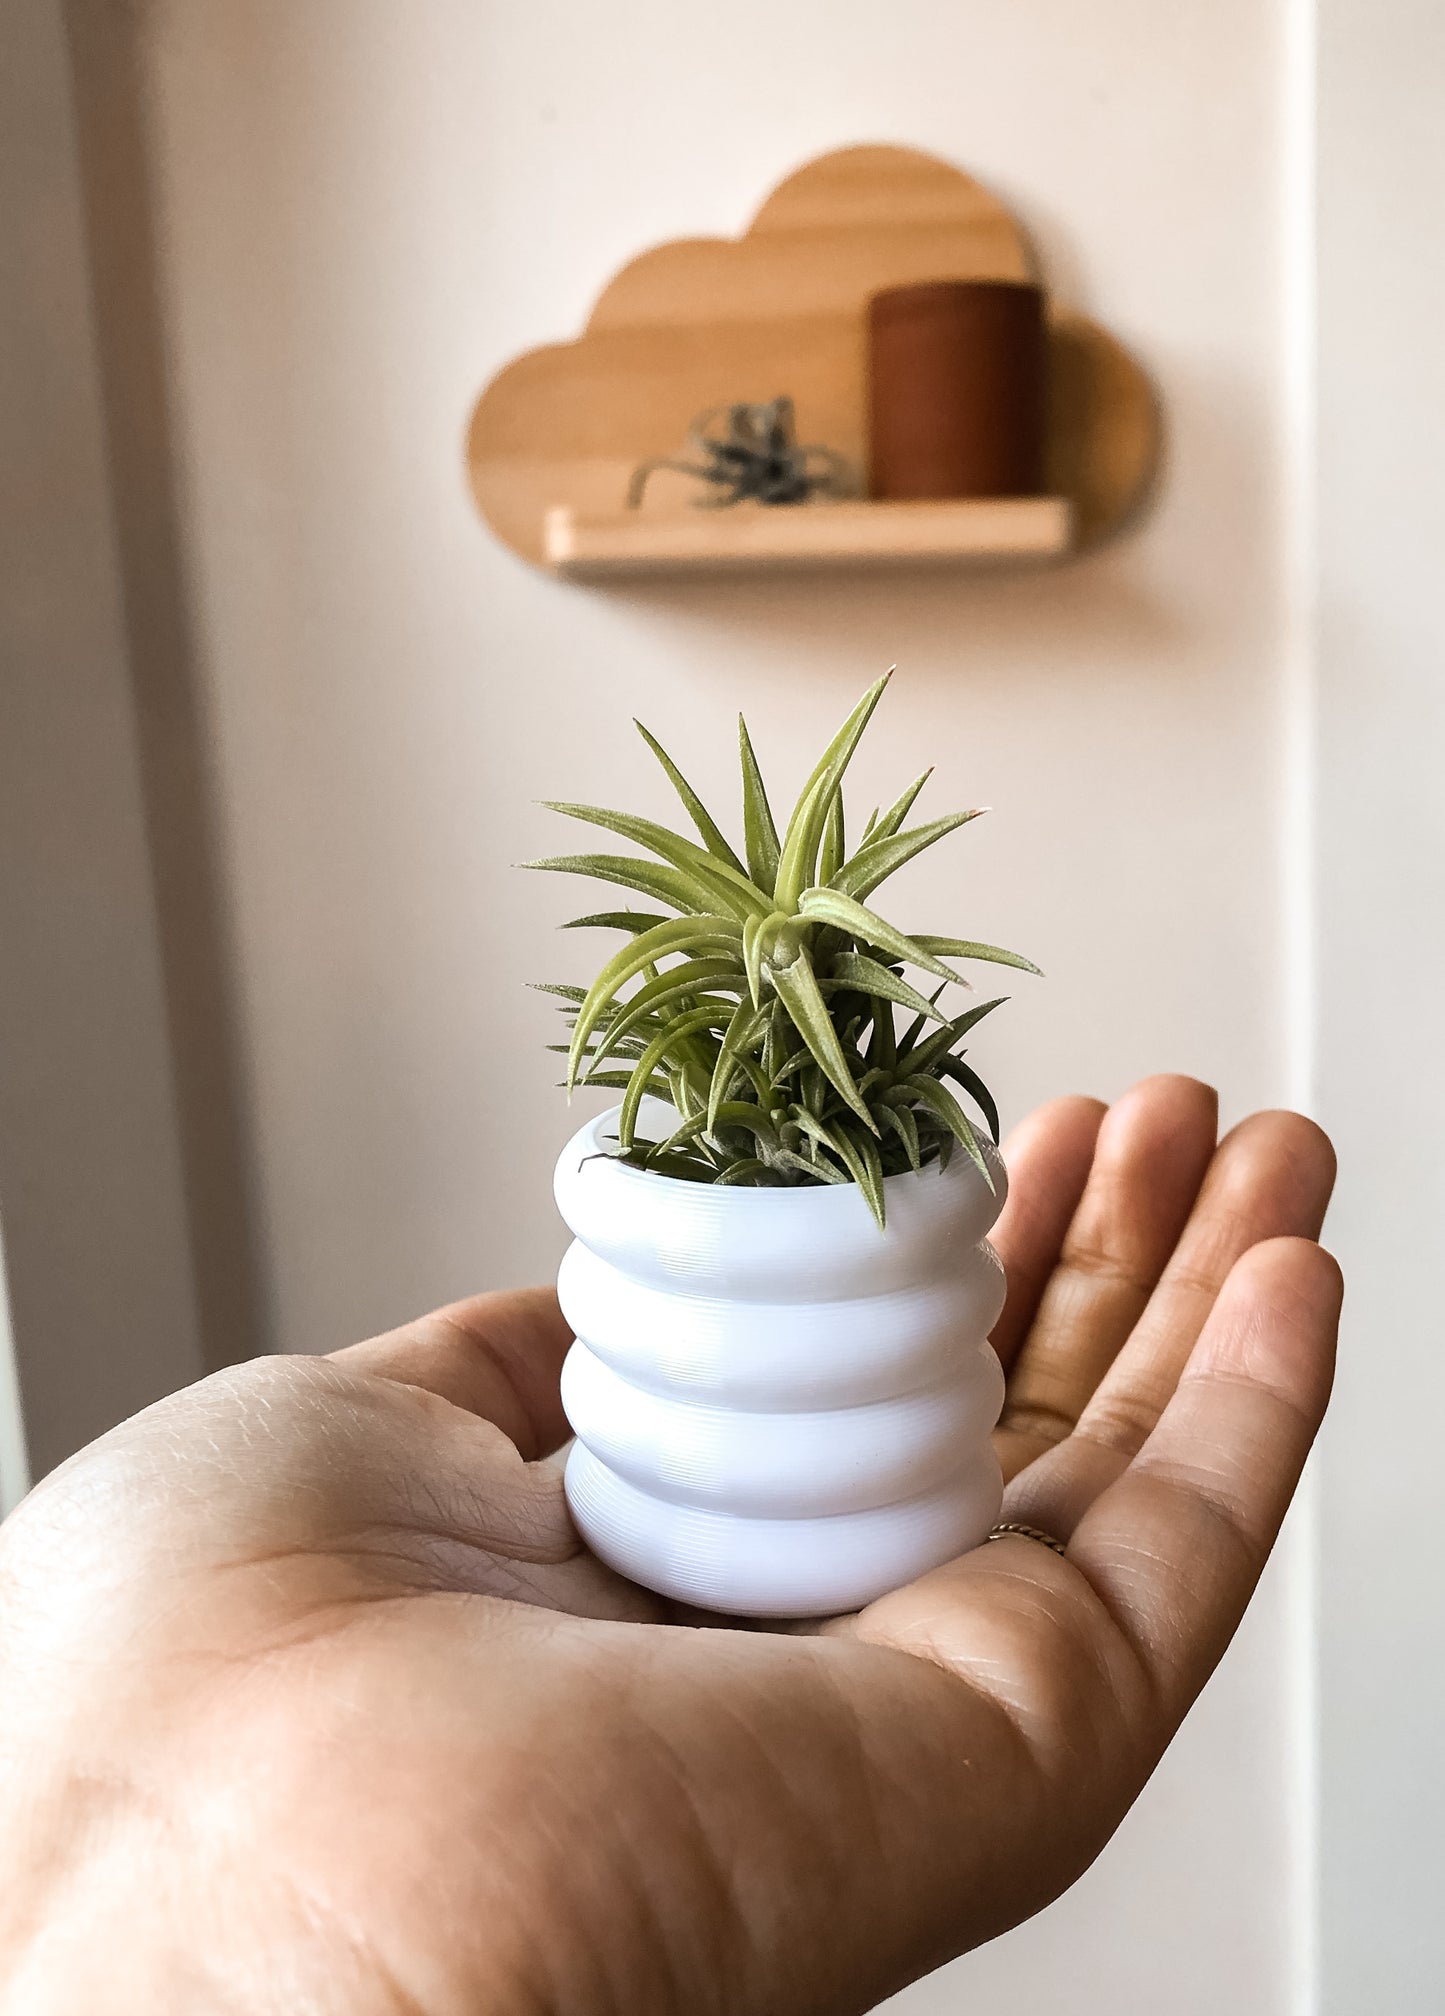 Miniature 3D printed planter